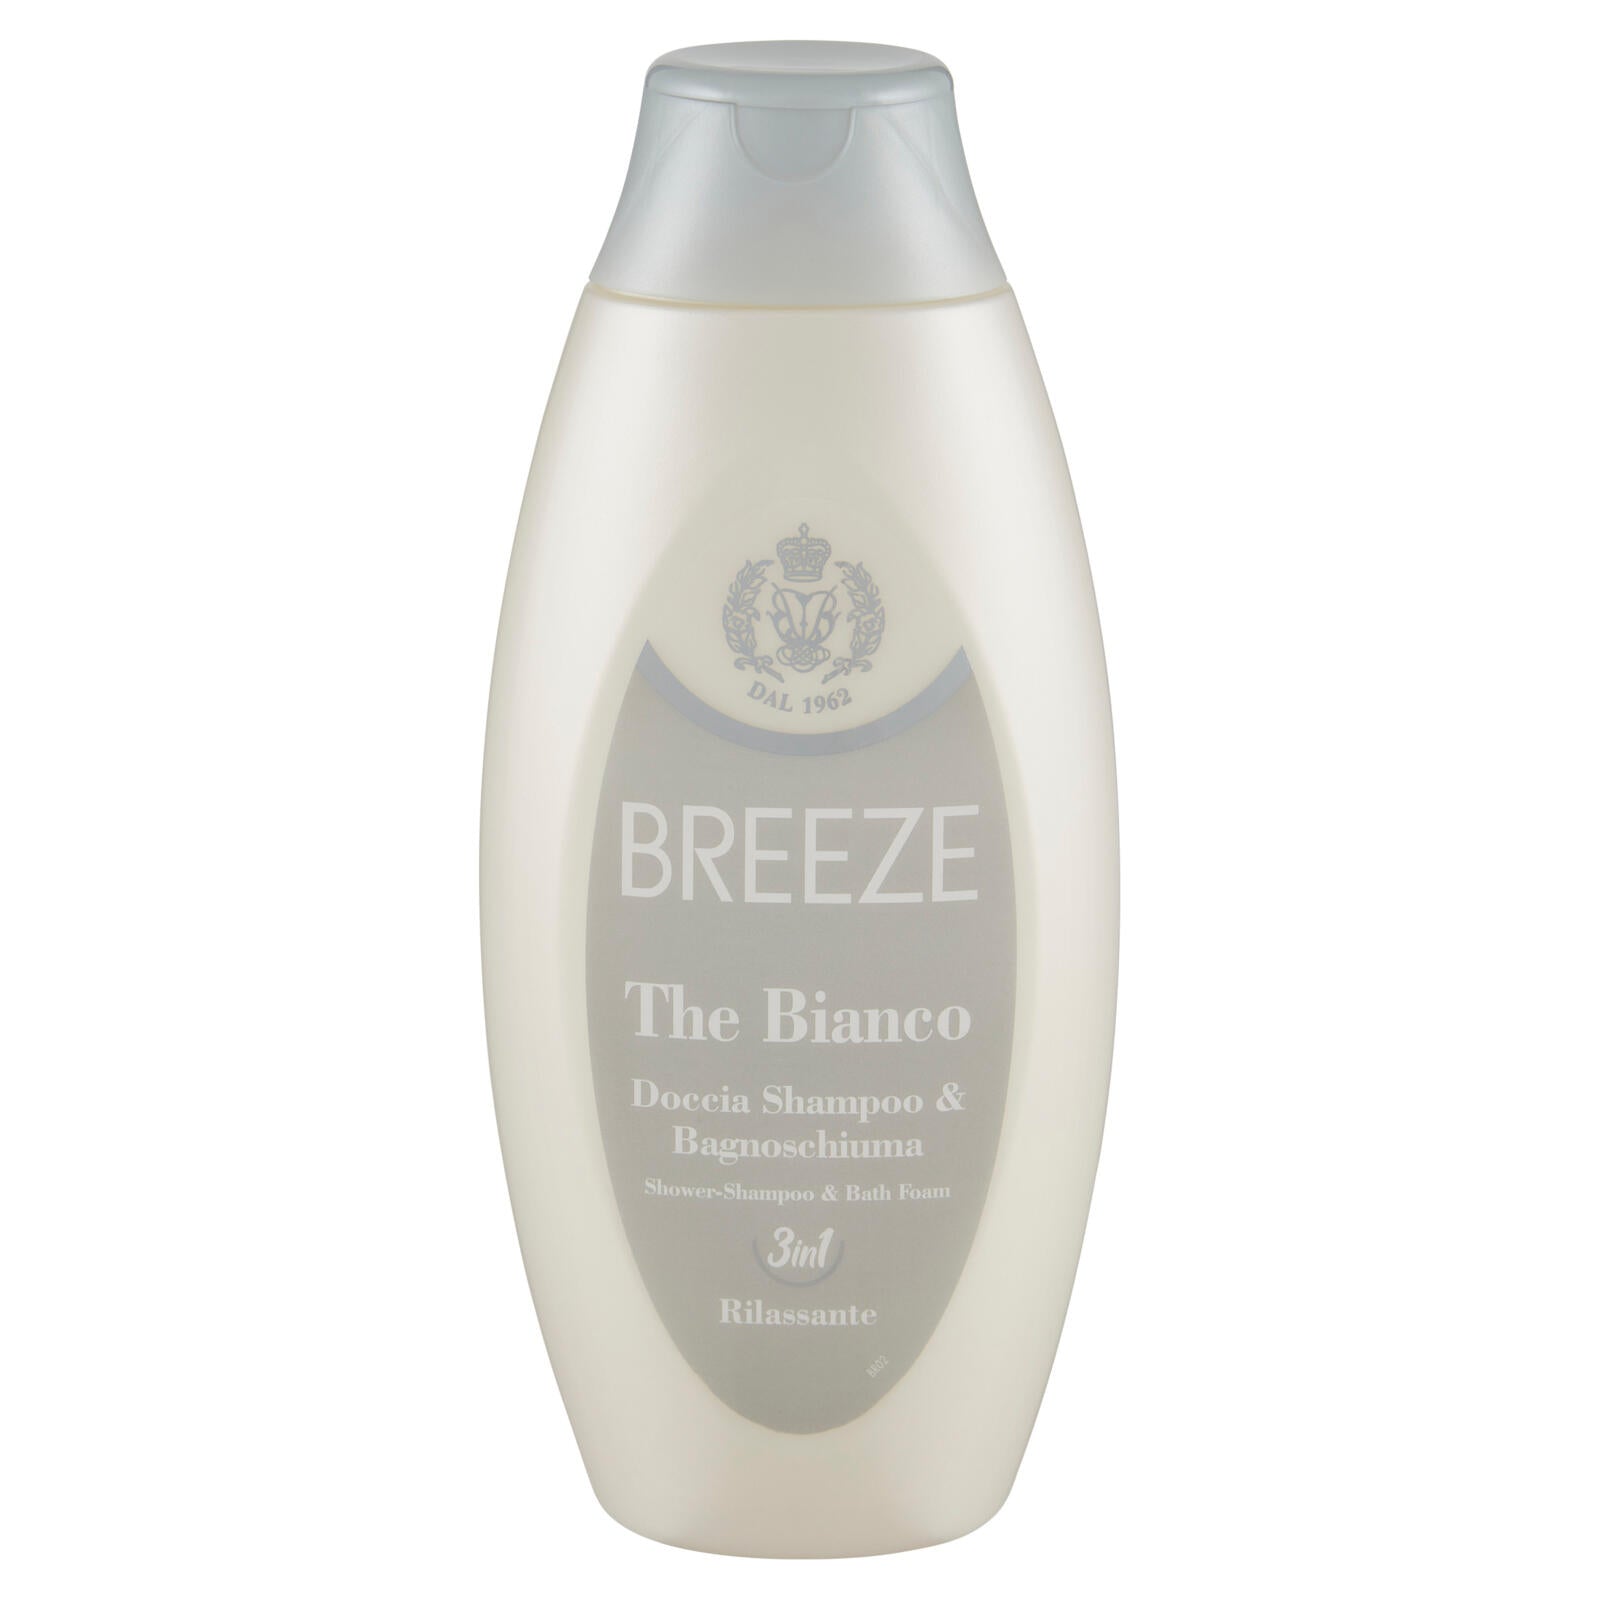 Breeze The Bianco Doccia Shampoo & Bagnoschiuma 3in1 Rilassante 400 mL